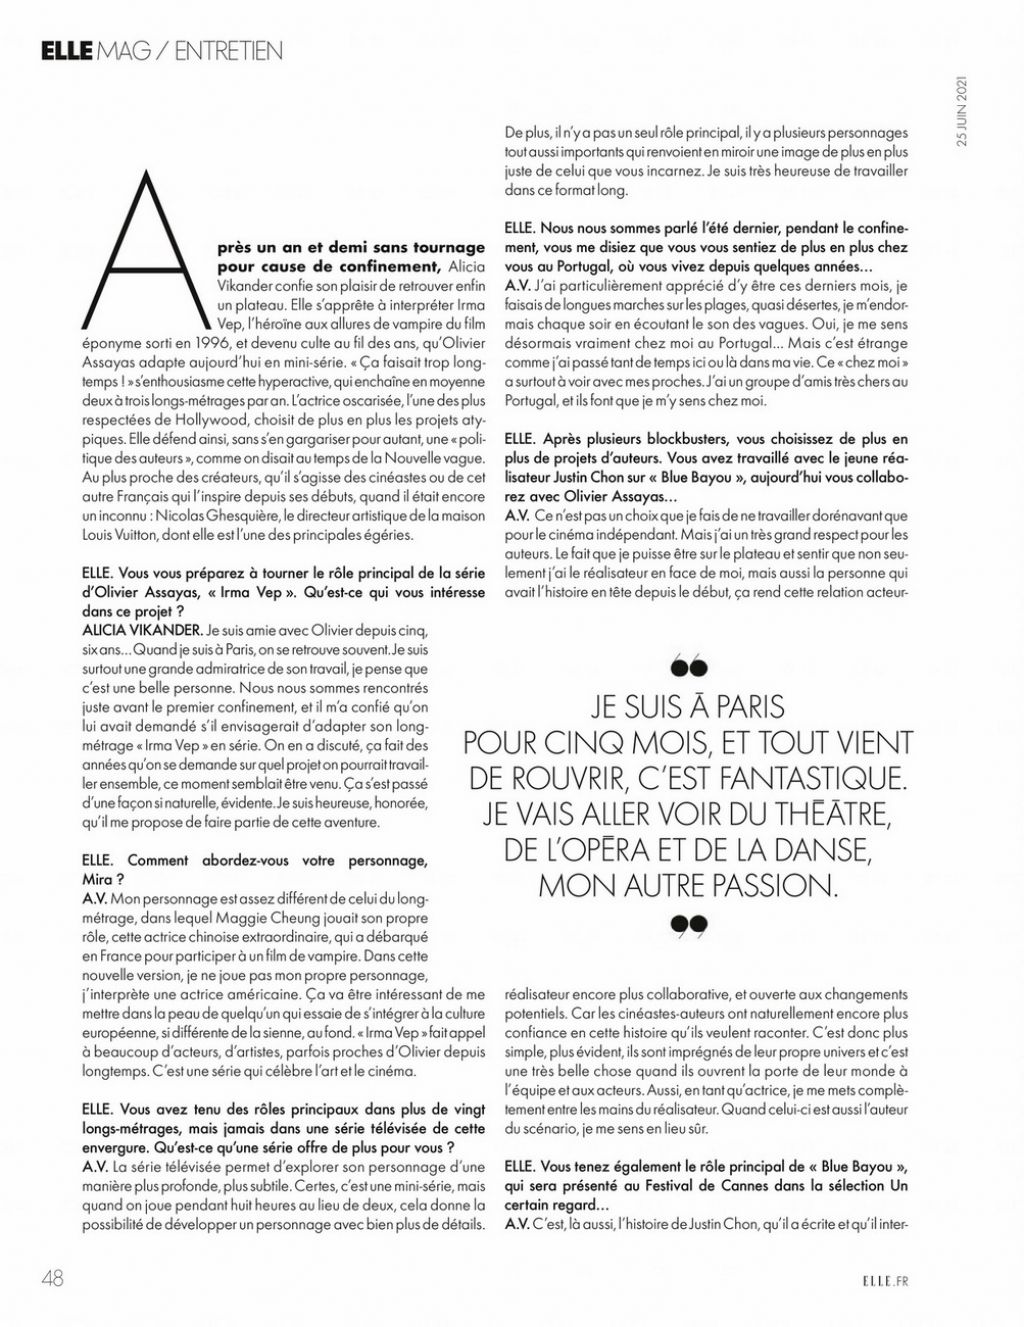 Alicia Vikander - ELLE France 06/25/2021 Issue • CelebMafia